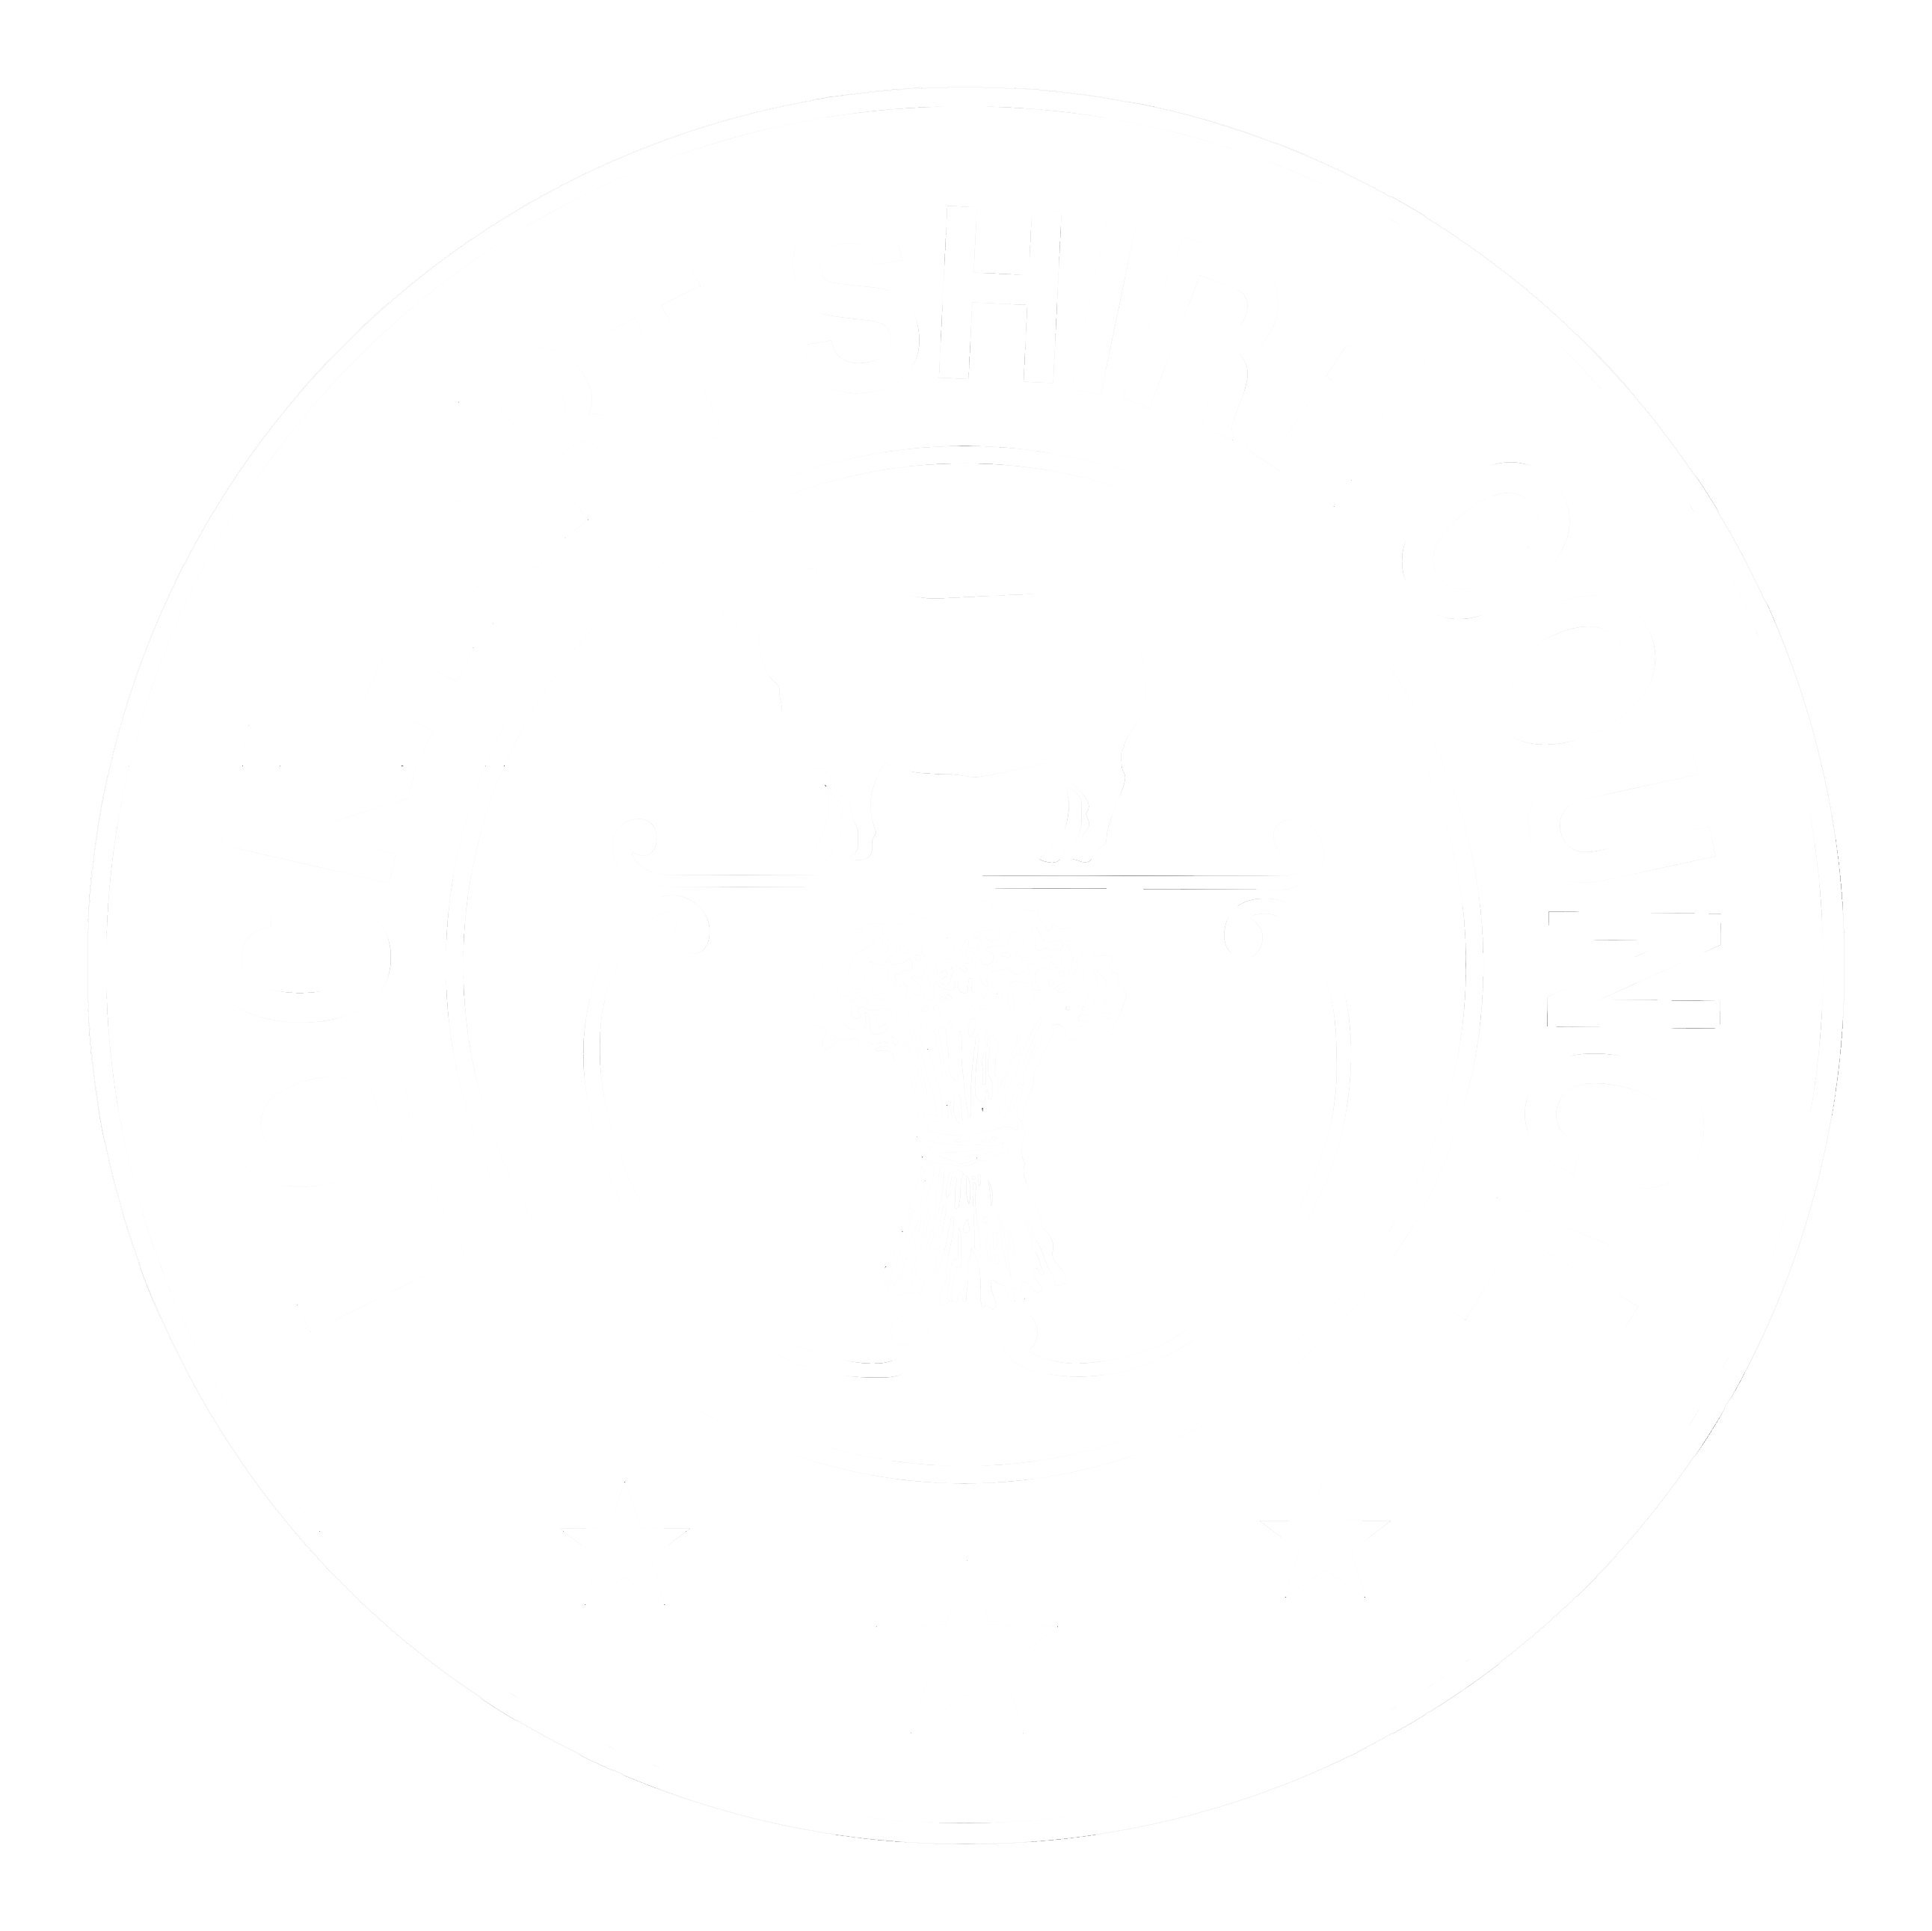 Lockhart Shire Council